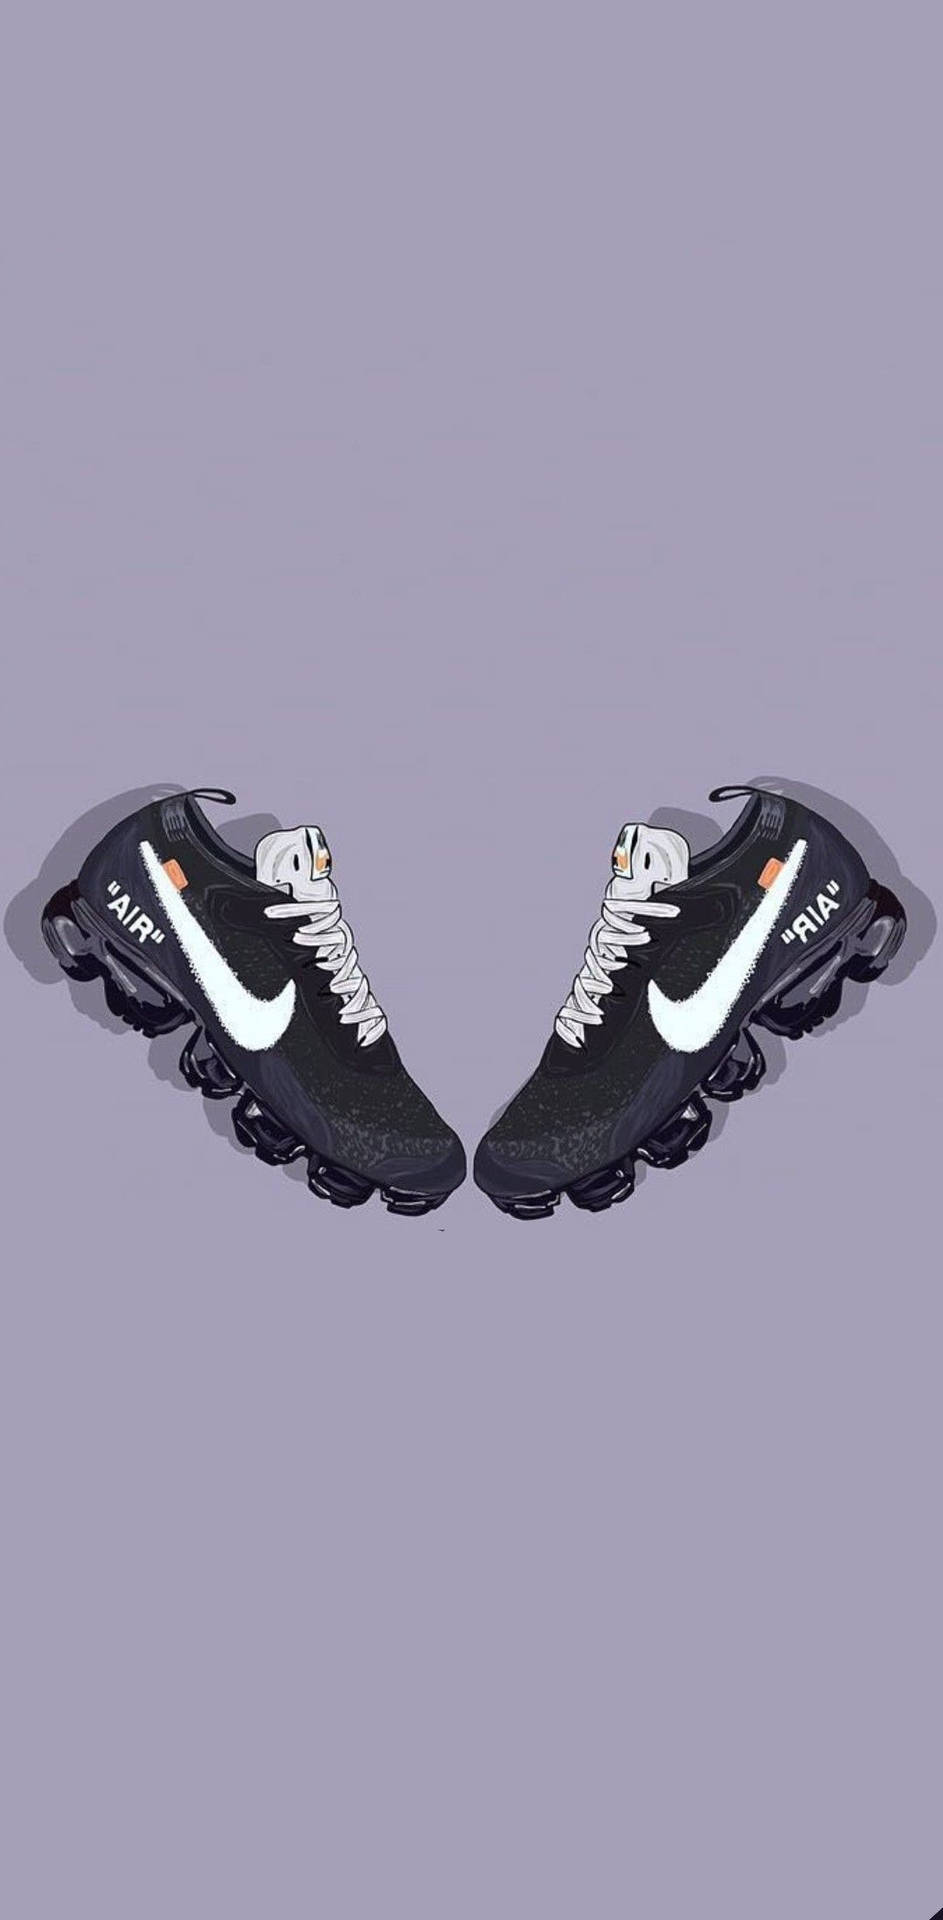 Sneaker Off-white Nike Vapormax Background